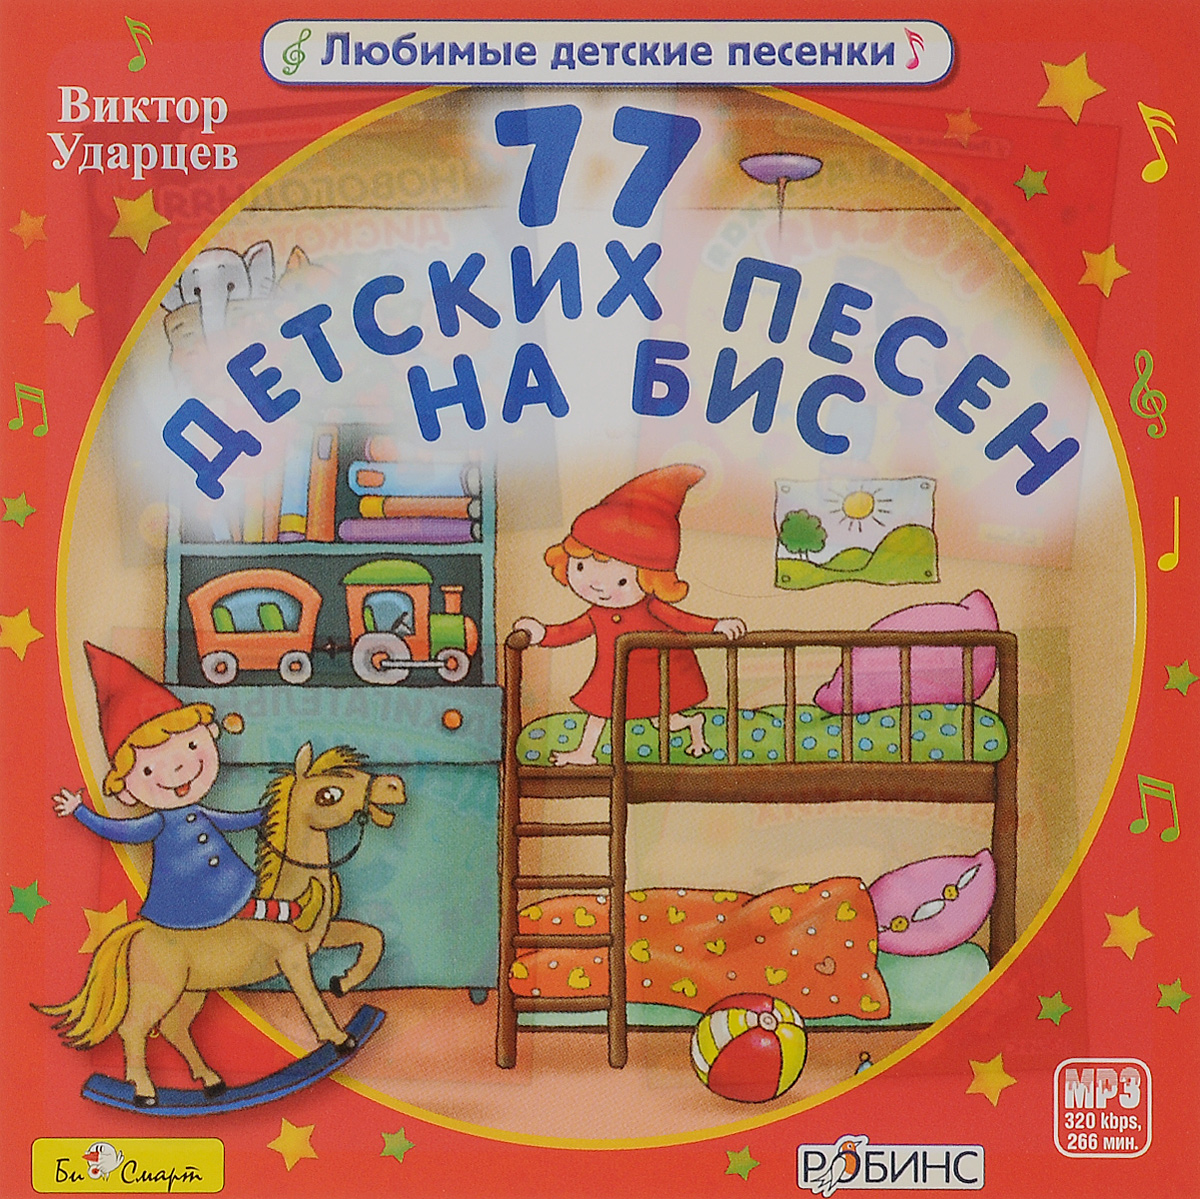 Виктор Ударцев. 77 детских песен на бис (mp3)